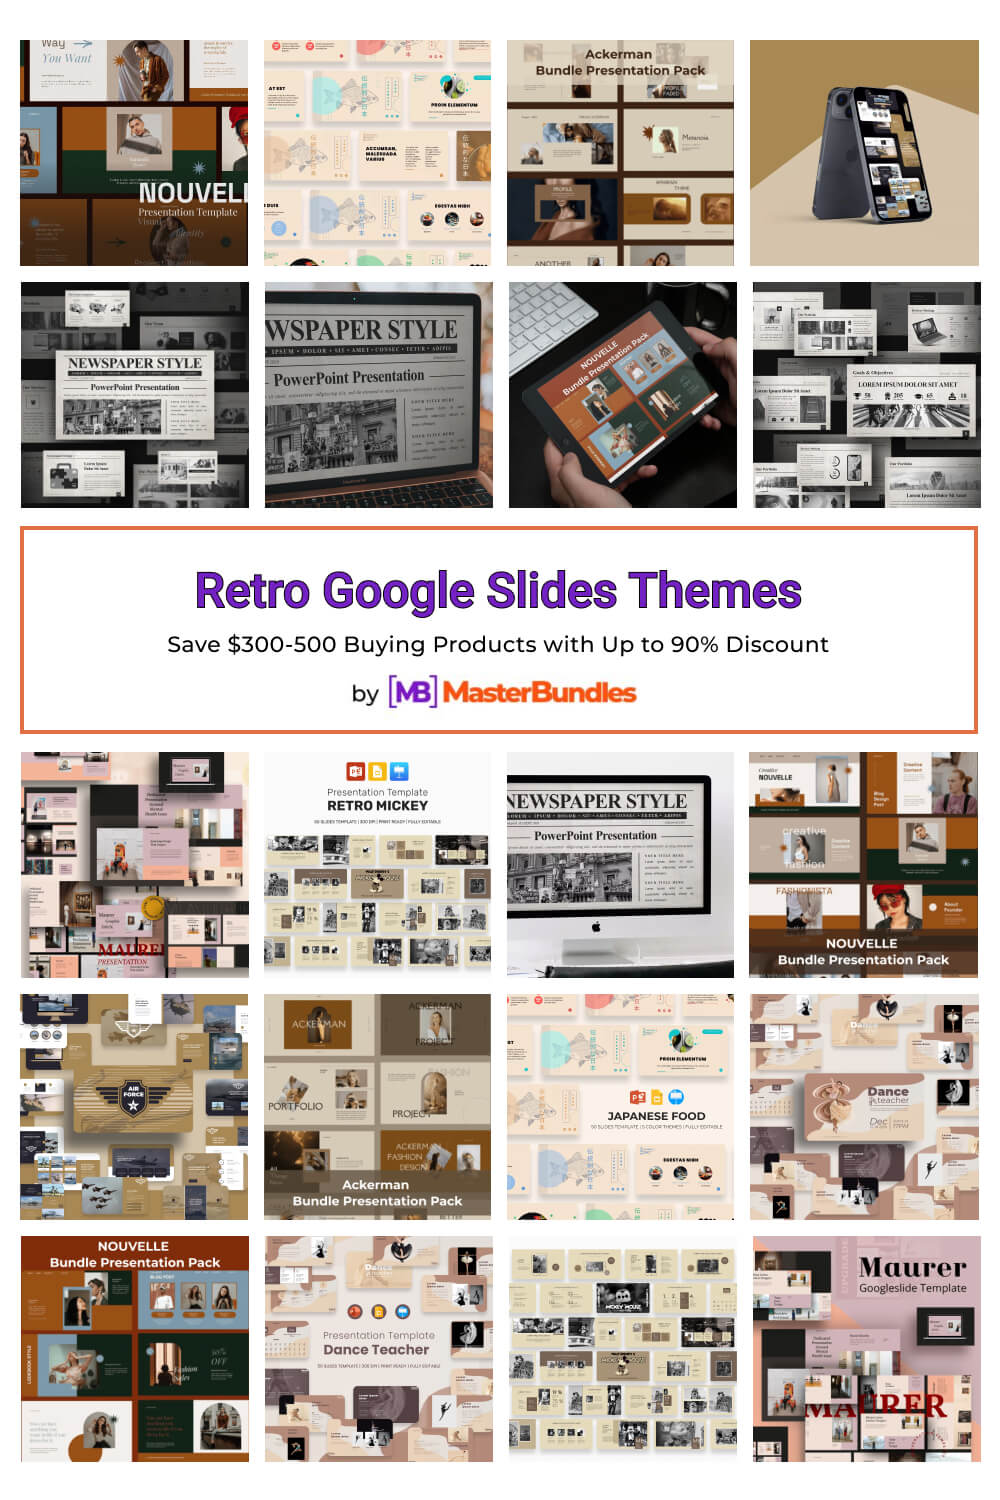 retro google slides themes pinterest image.